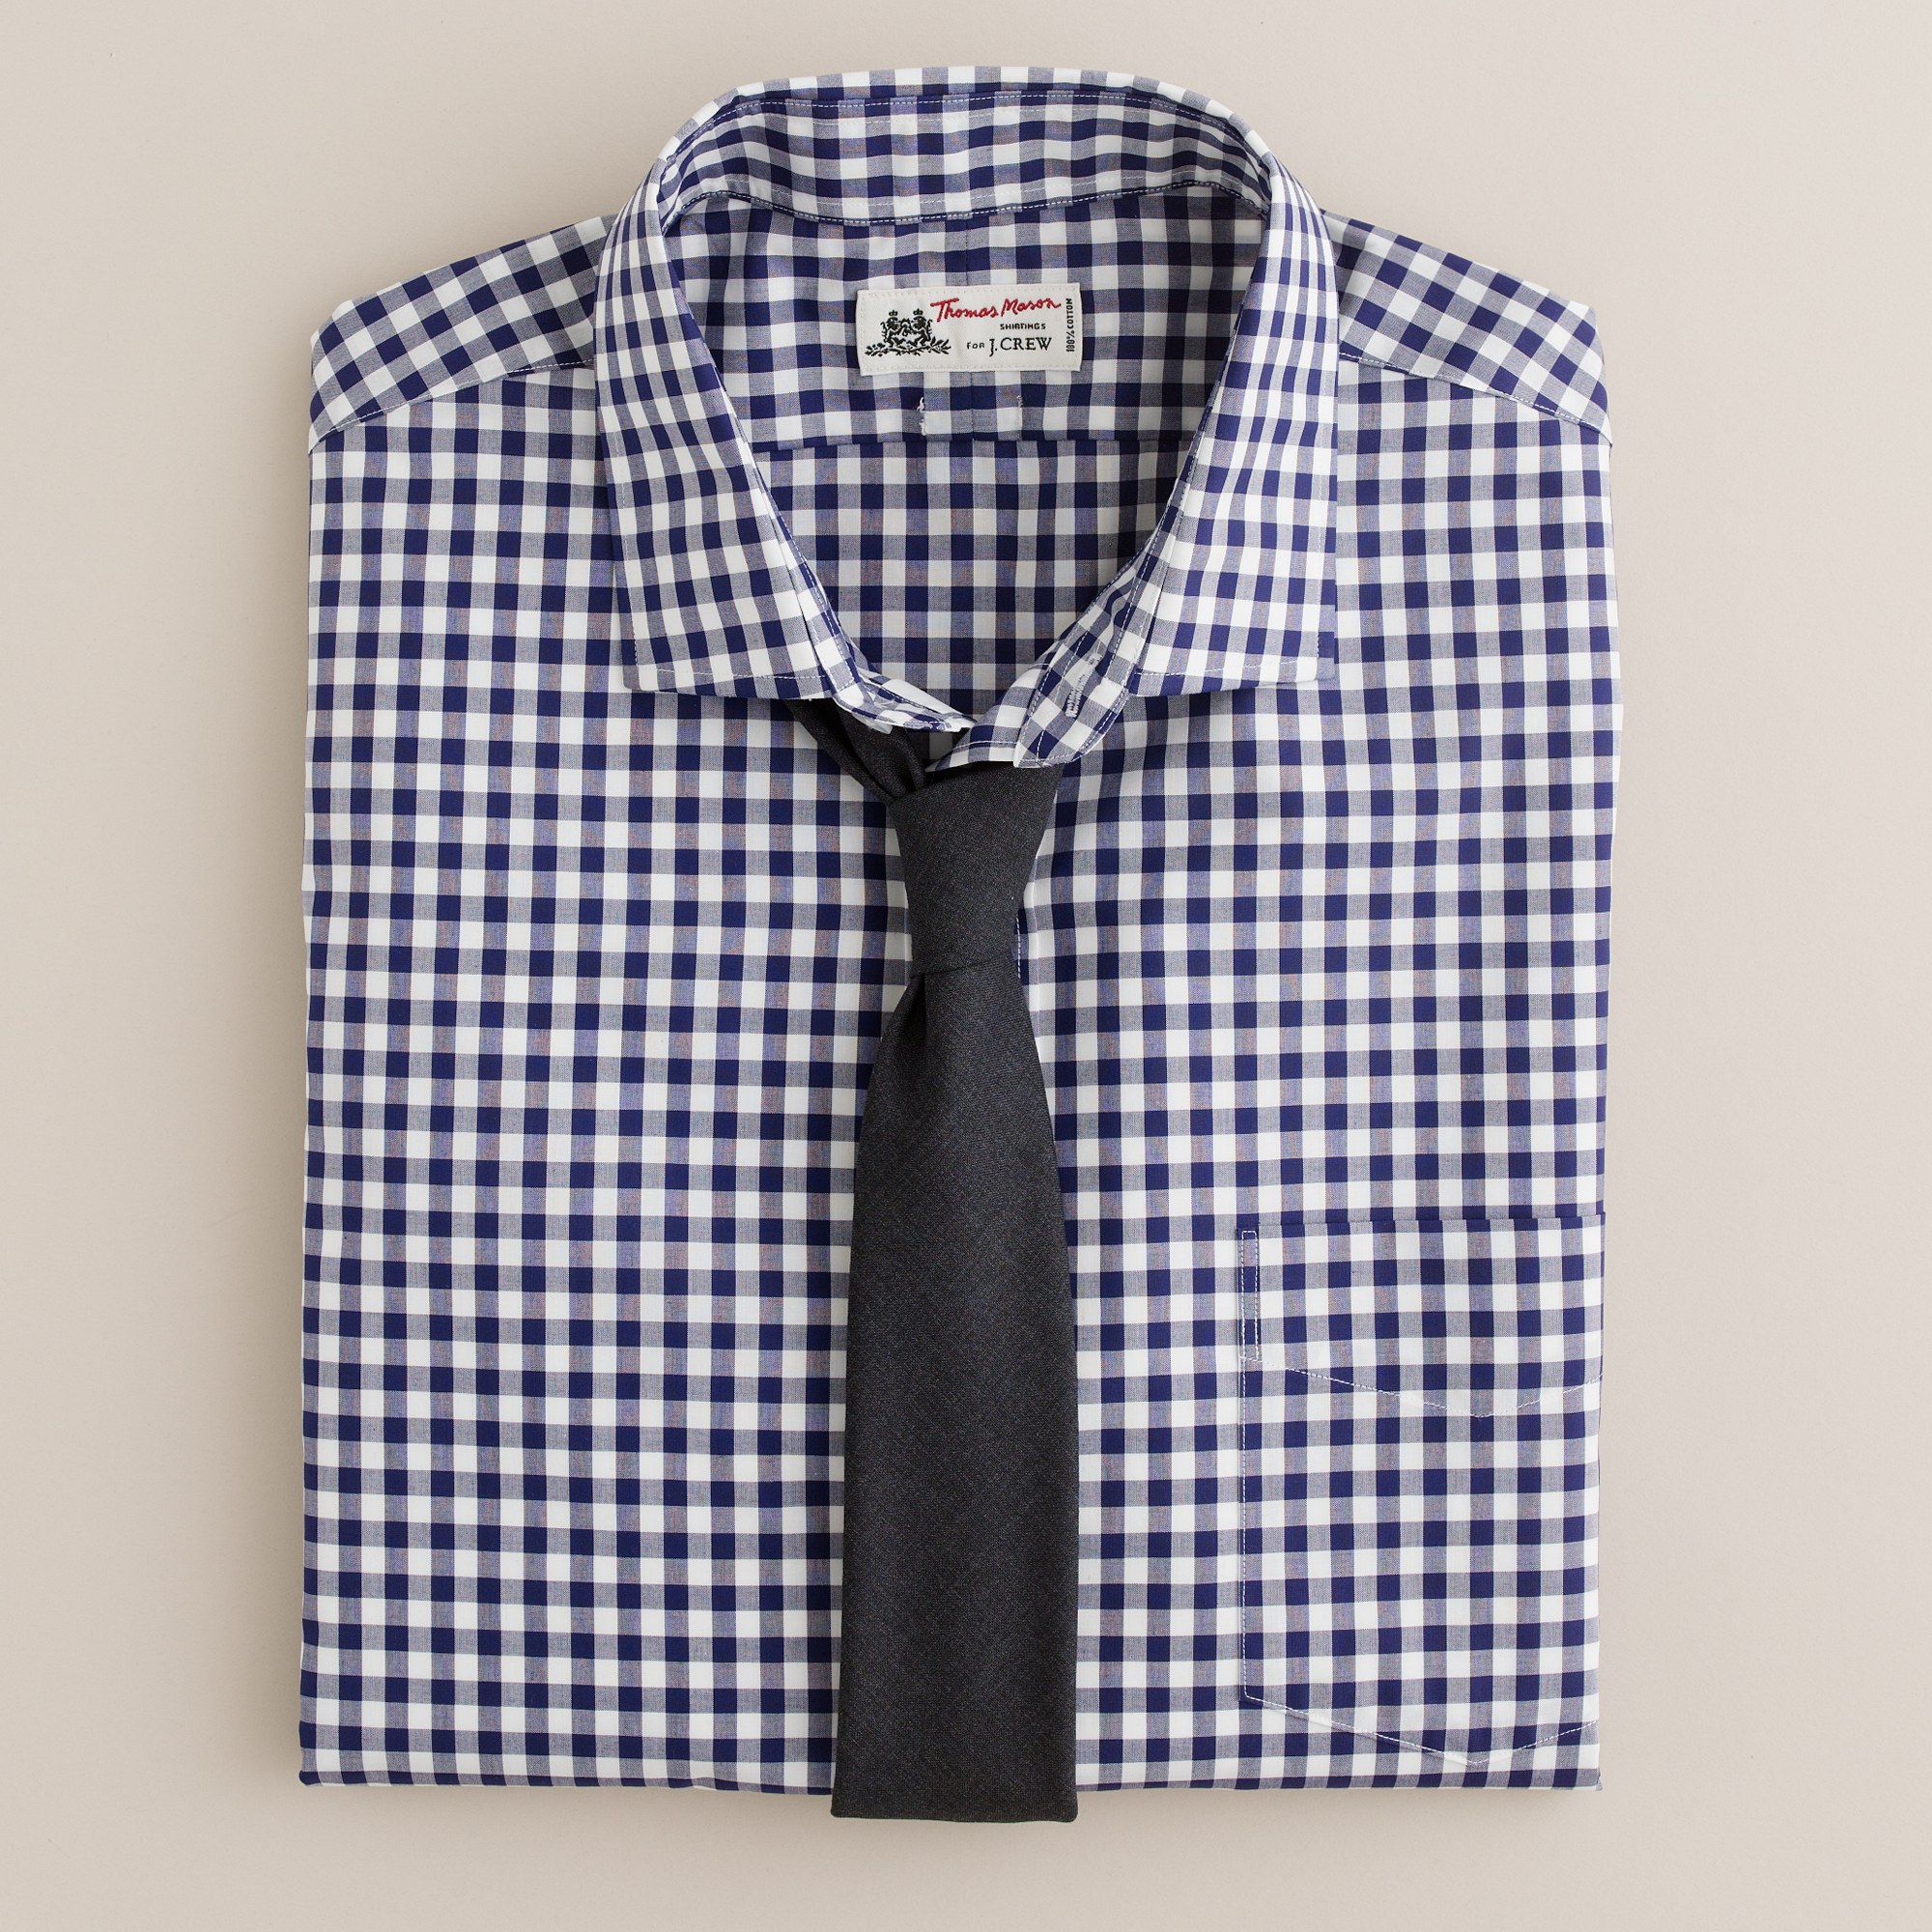 J.crew Thomas Mason® Fabric Spread-collar Dress Shirt in Navy Gingham